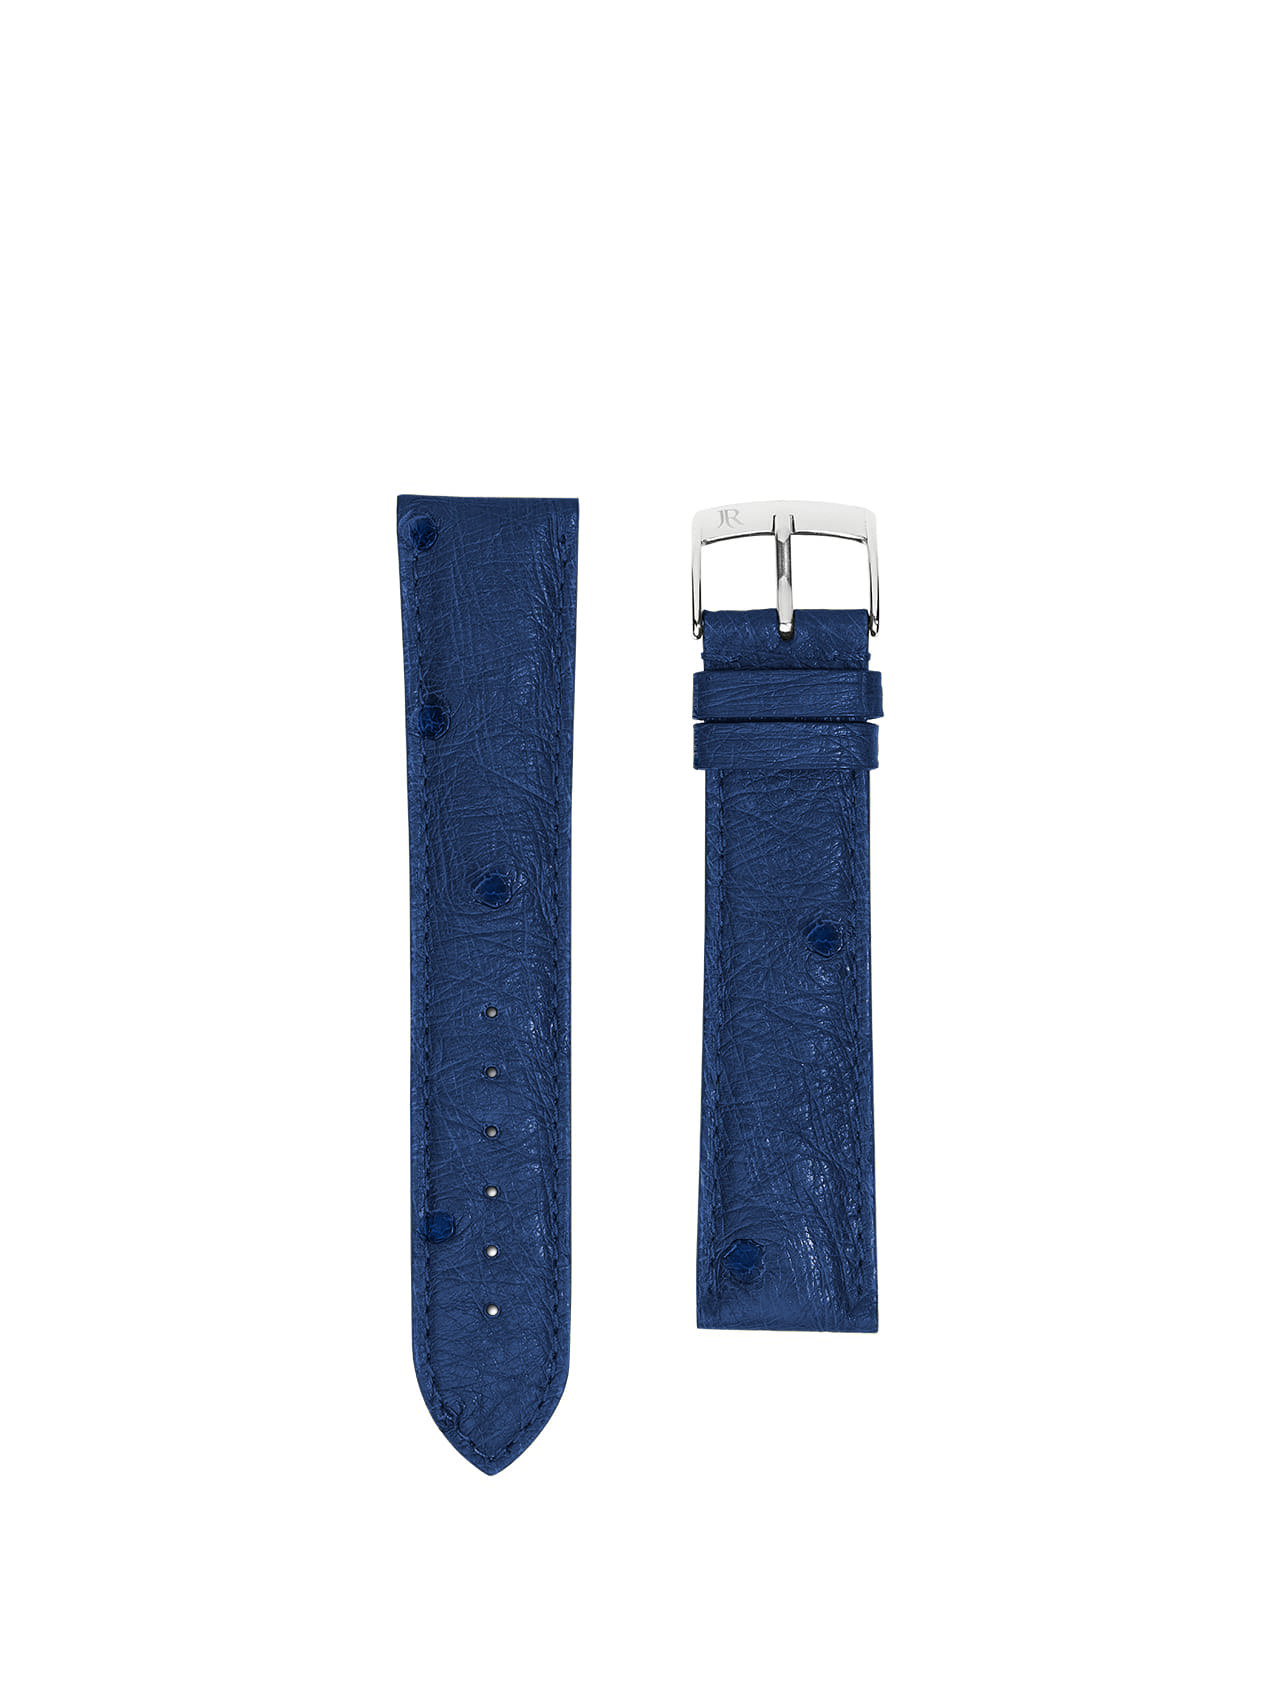 jean rousseau watch straps ostrich blue